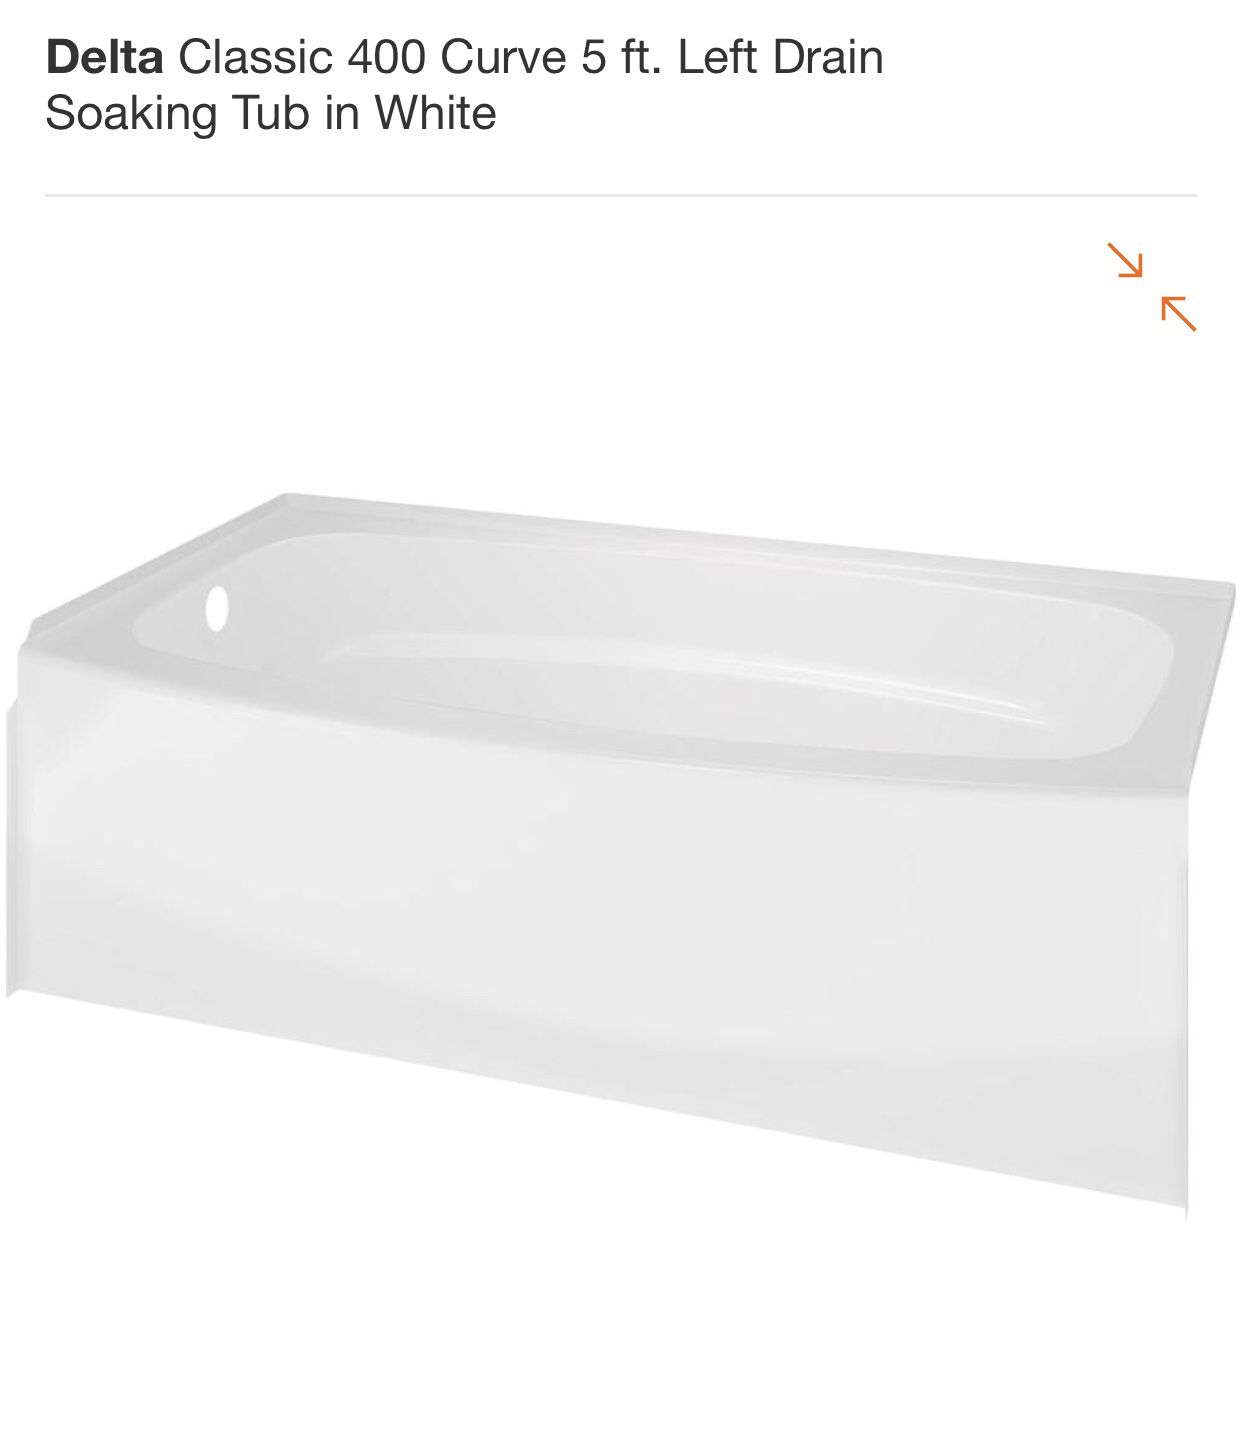 Delta 60x30” curved bath tub left drain